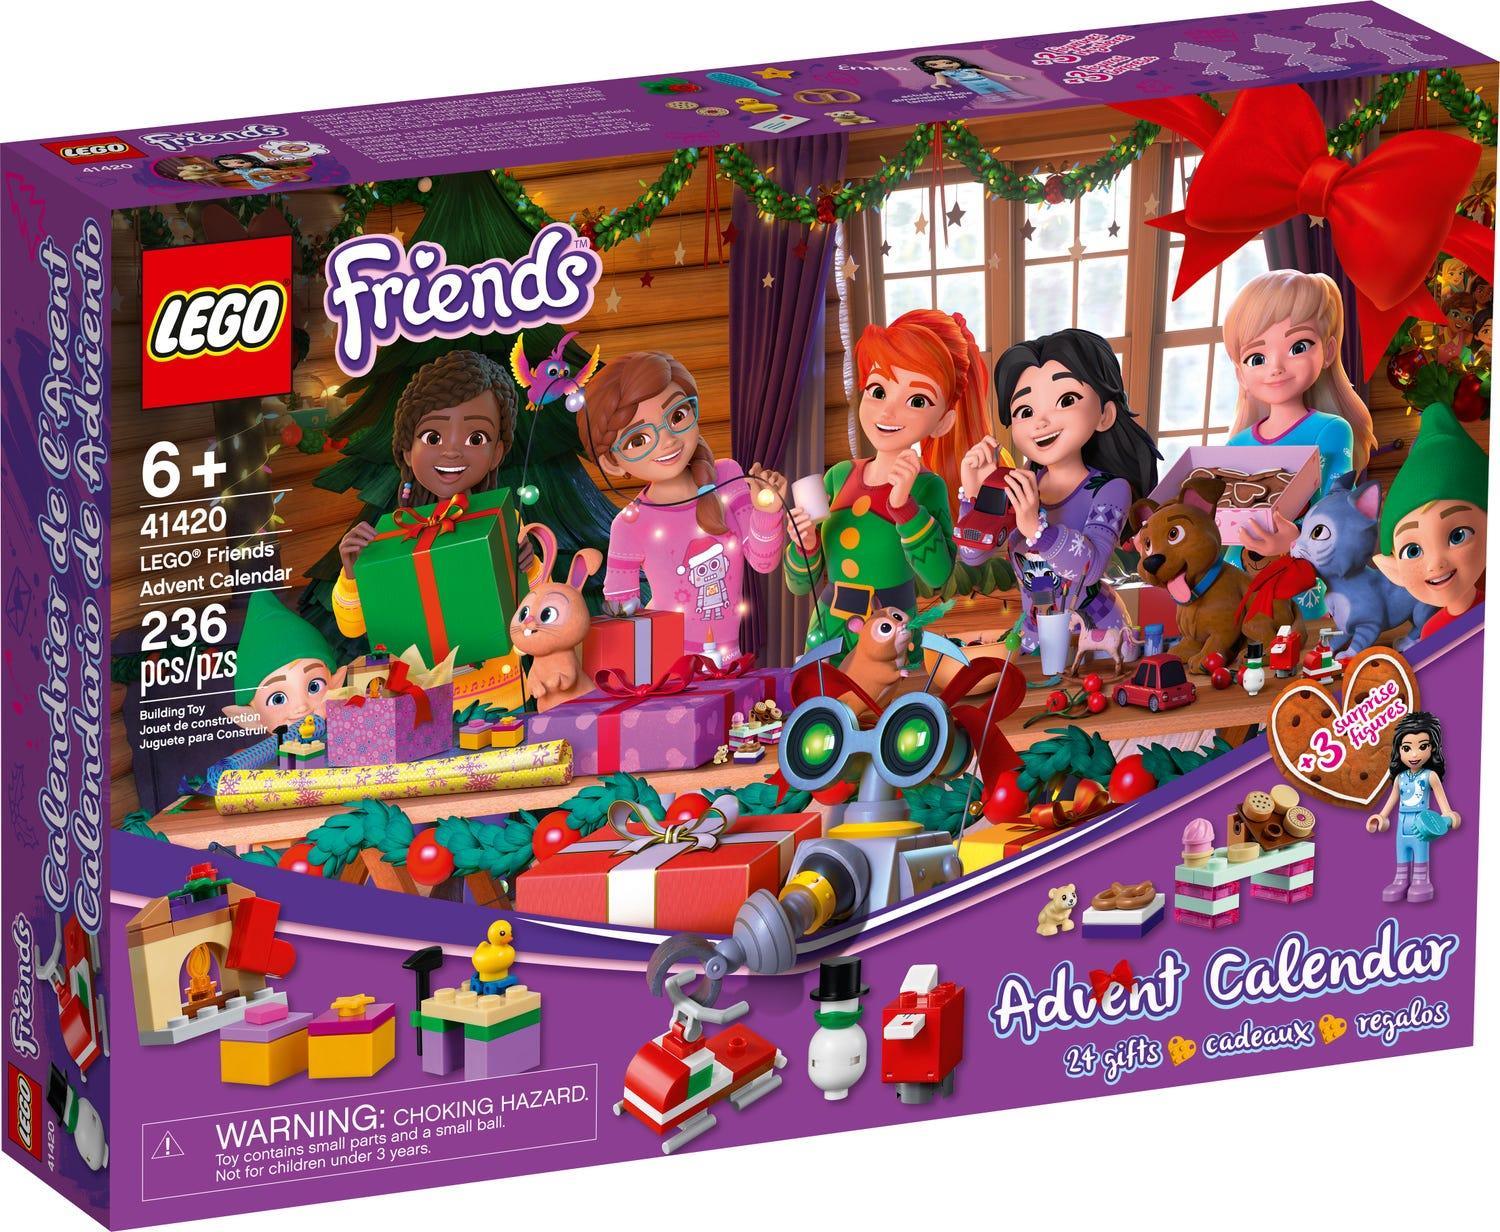 LEGO Friends adventkalender 41420 Friends LEGO Friends @ 2TTOYS LEGO €. 25.99